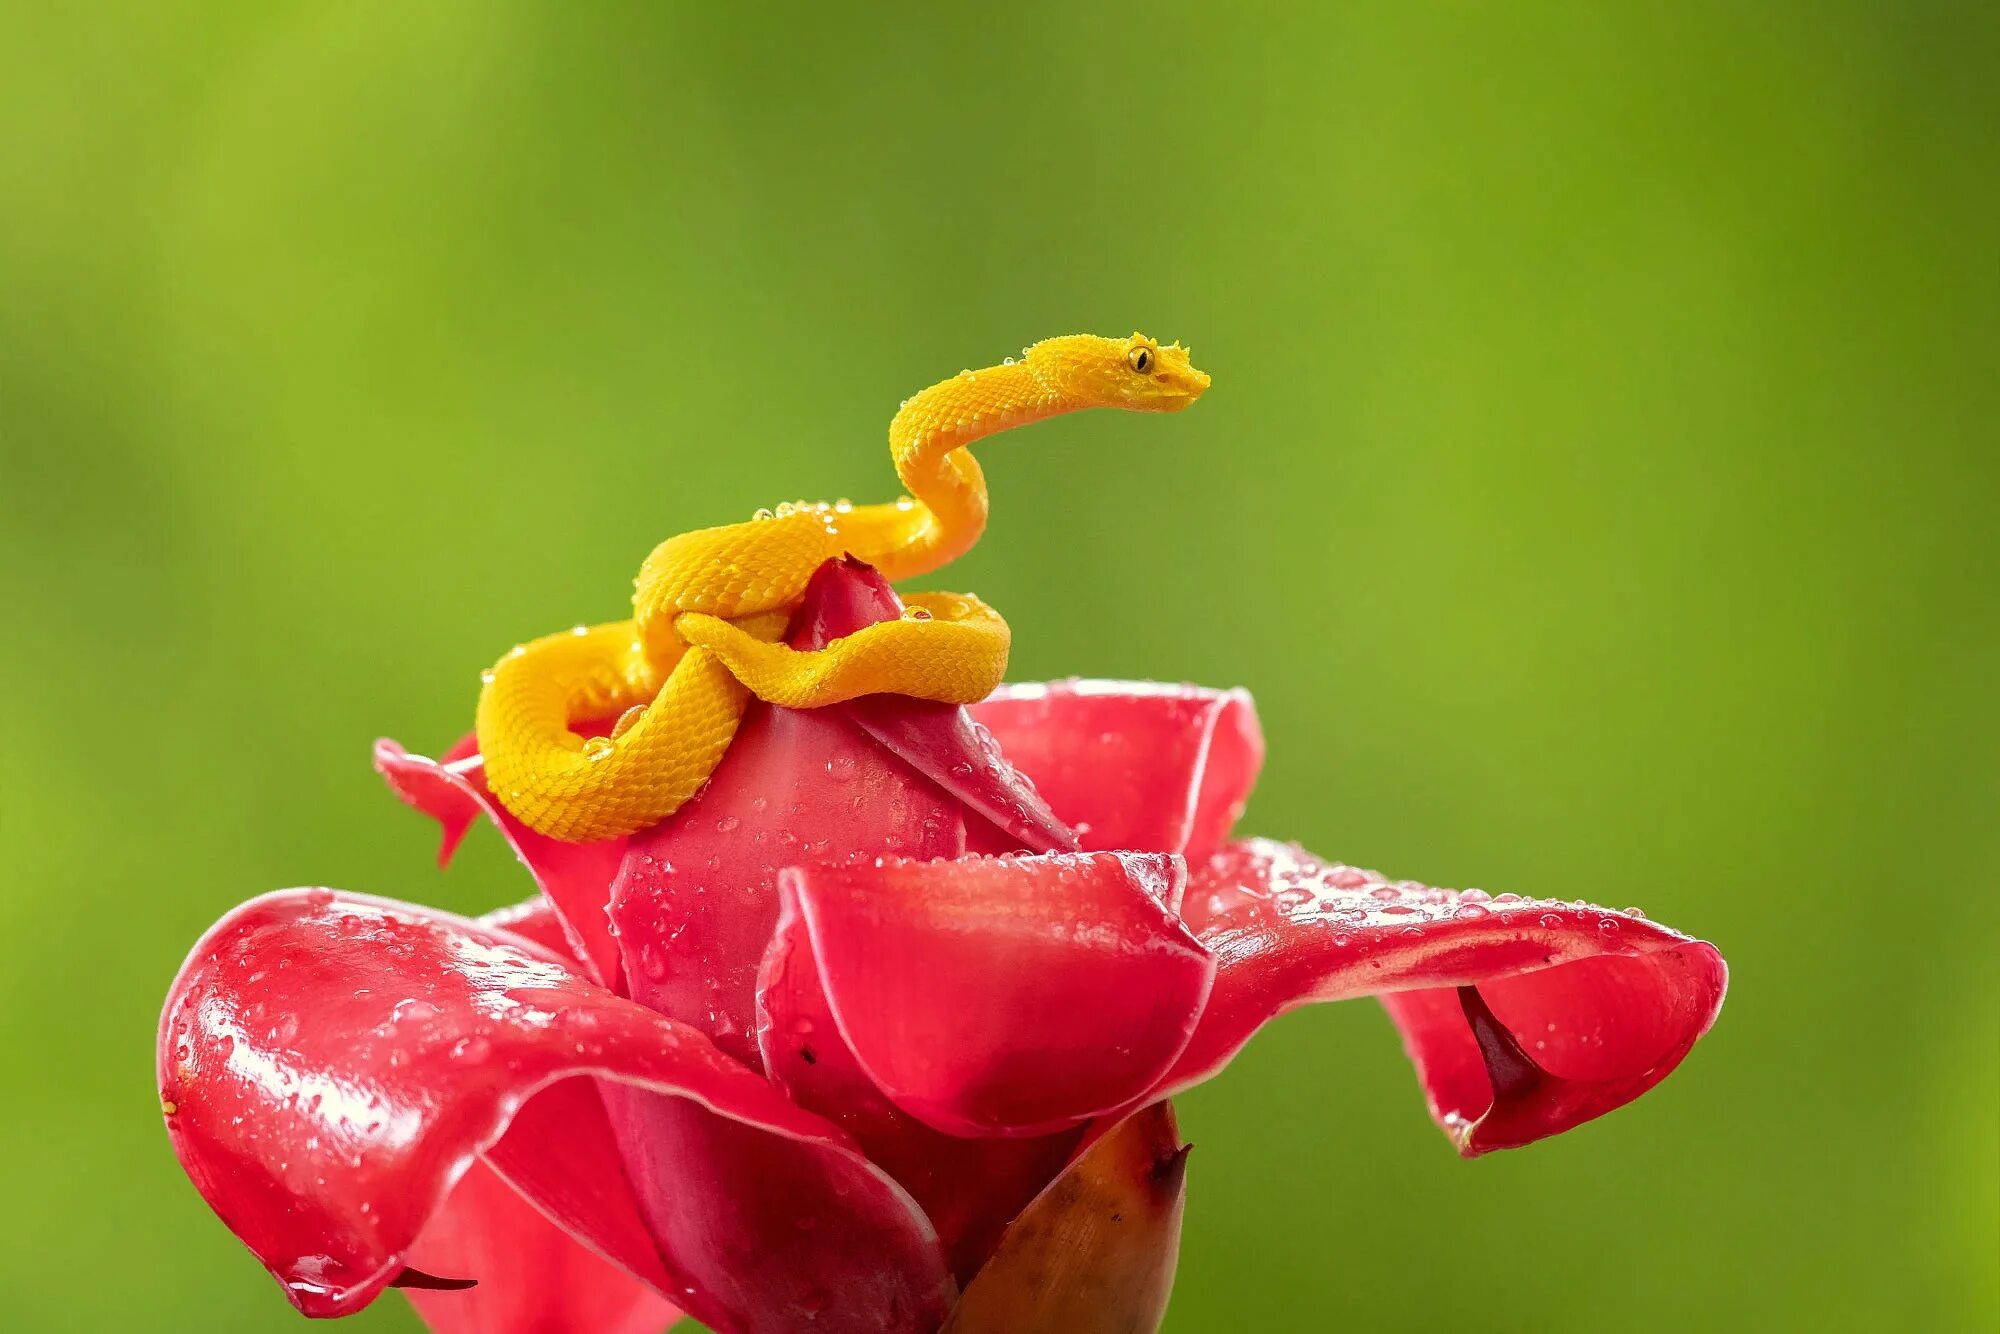 Цветок и змея. Змеях цветок. Змея в цветах. Змея с цветочком. Змея и цветок 2